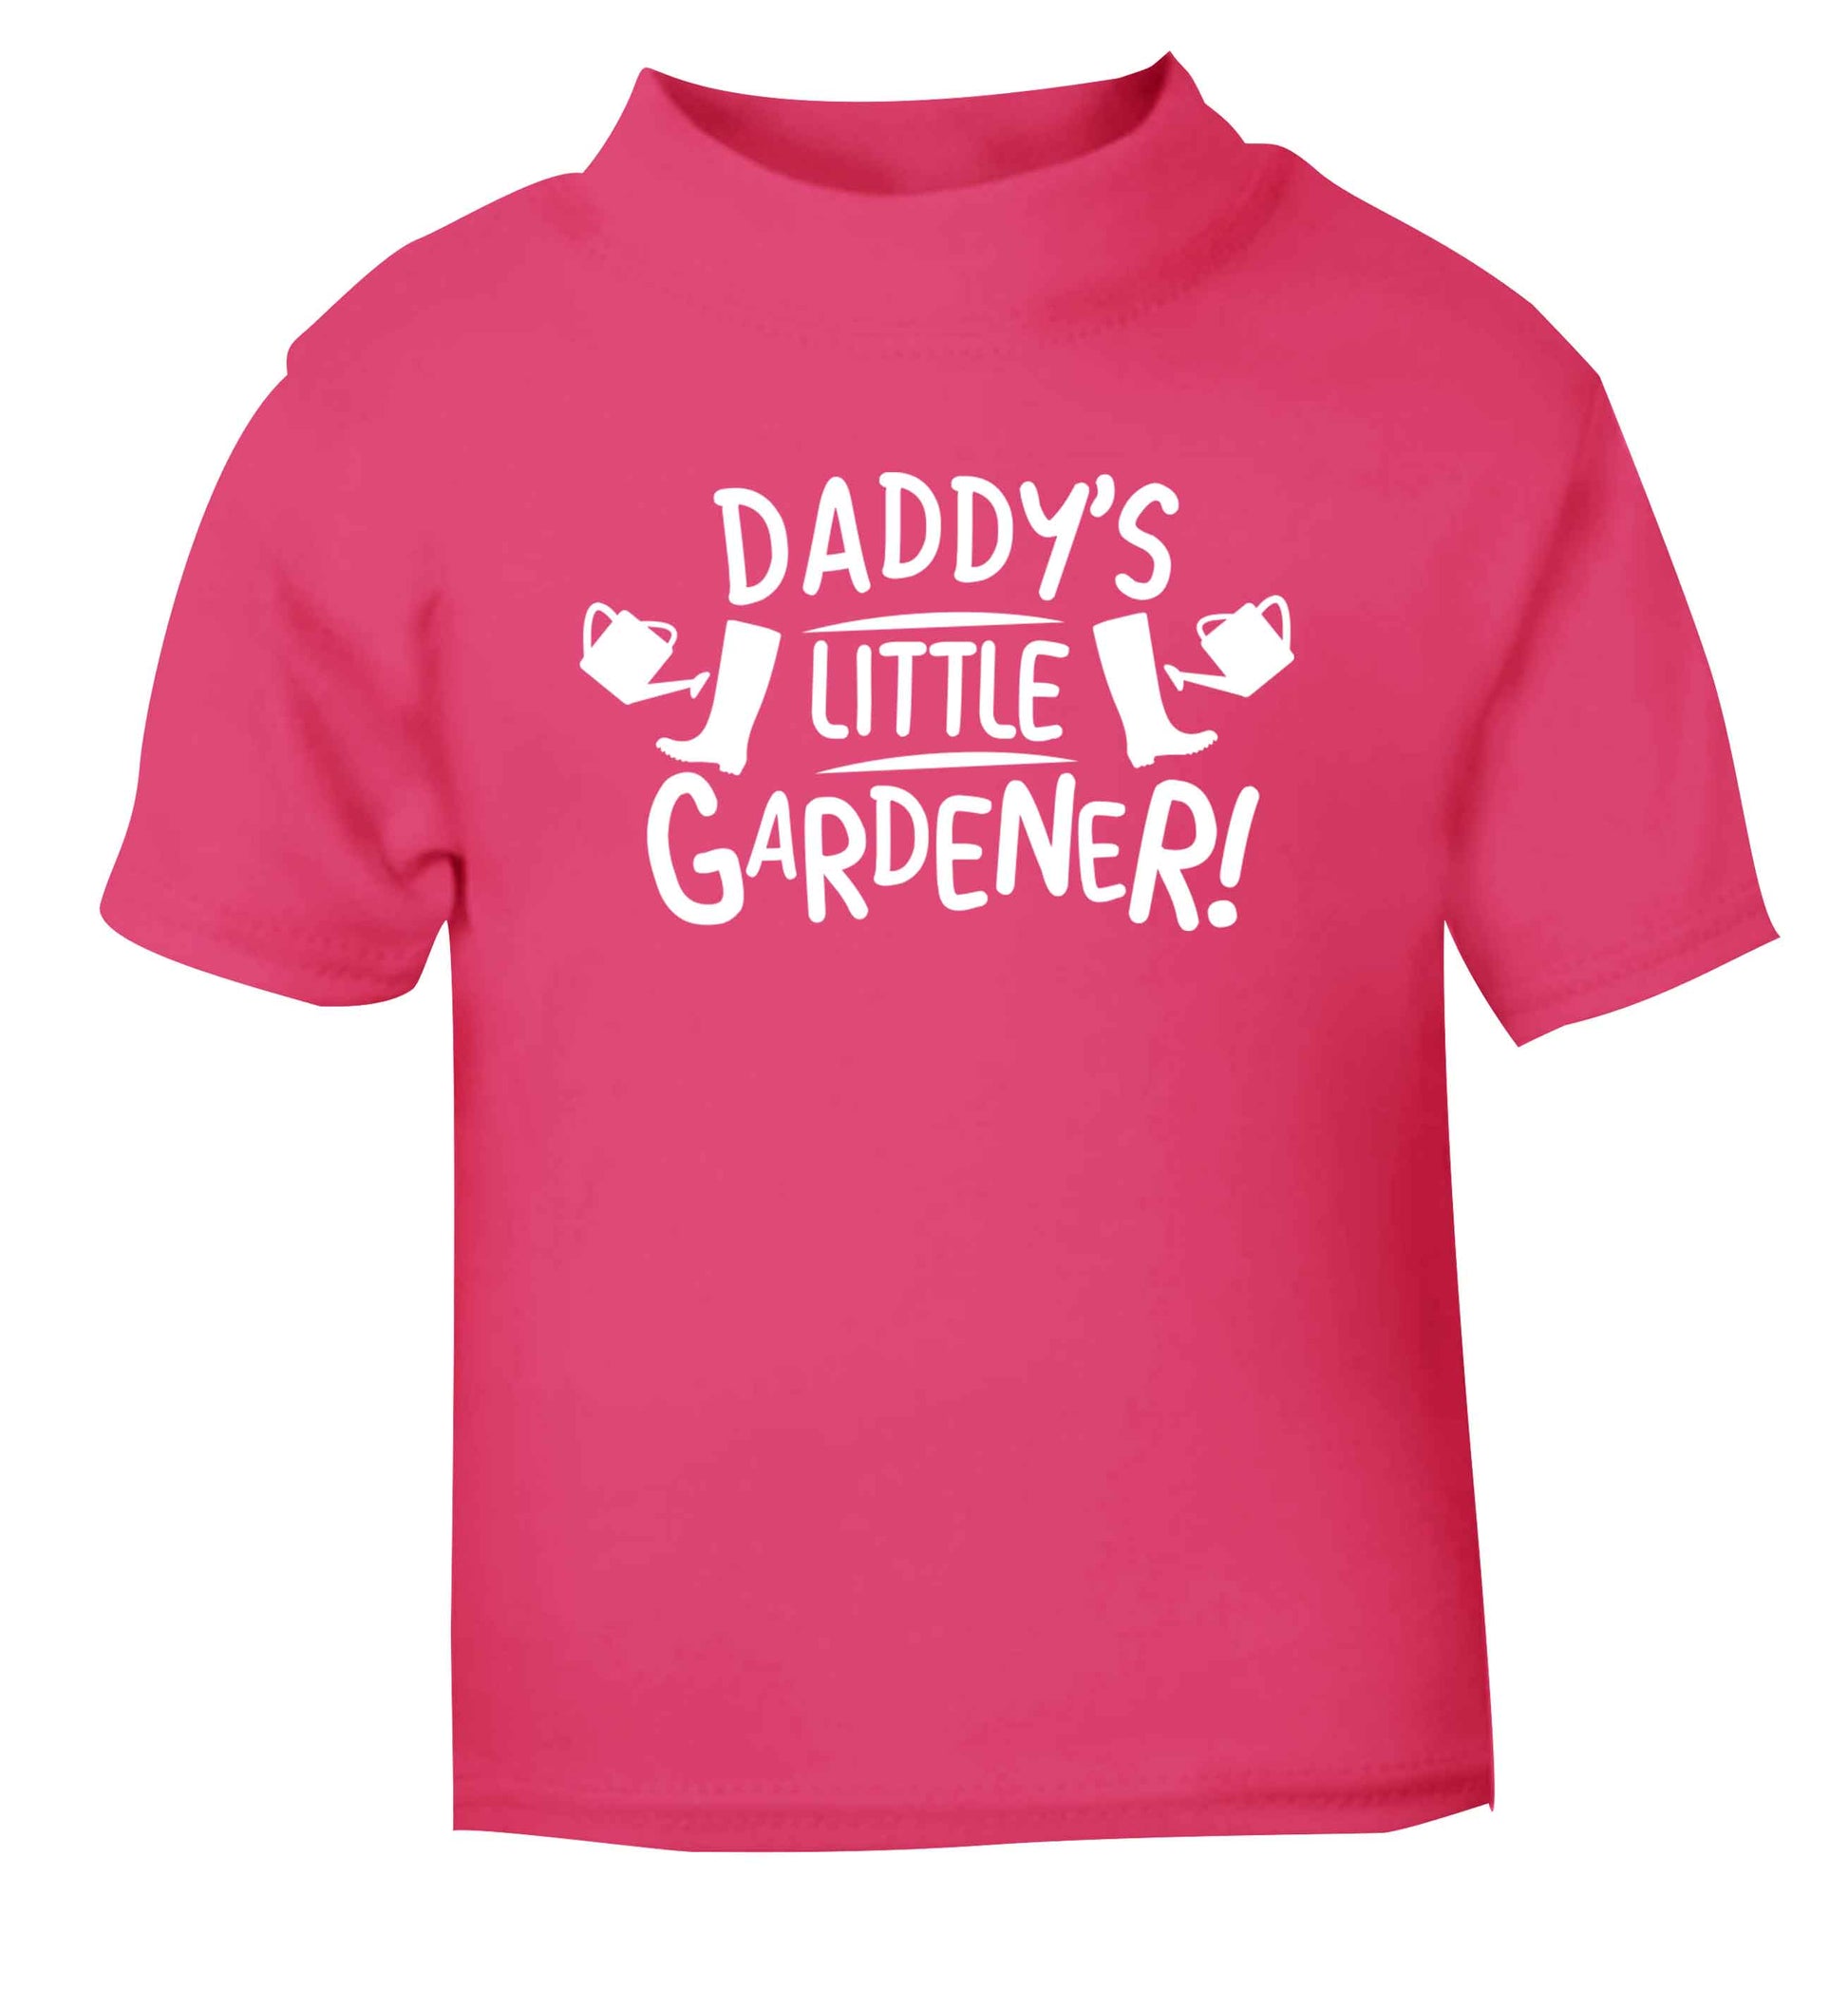 Daddy's little gardener pink Baby Toddler Tshirt 2 Years